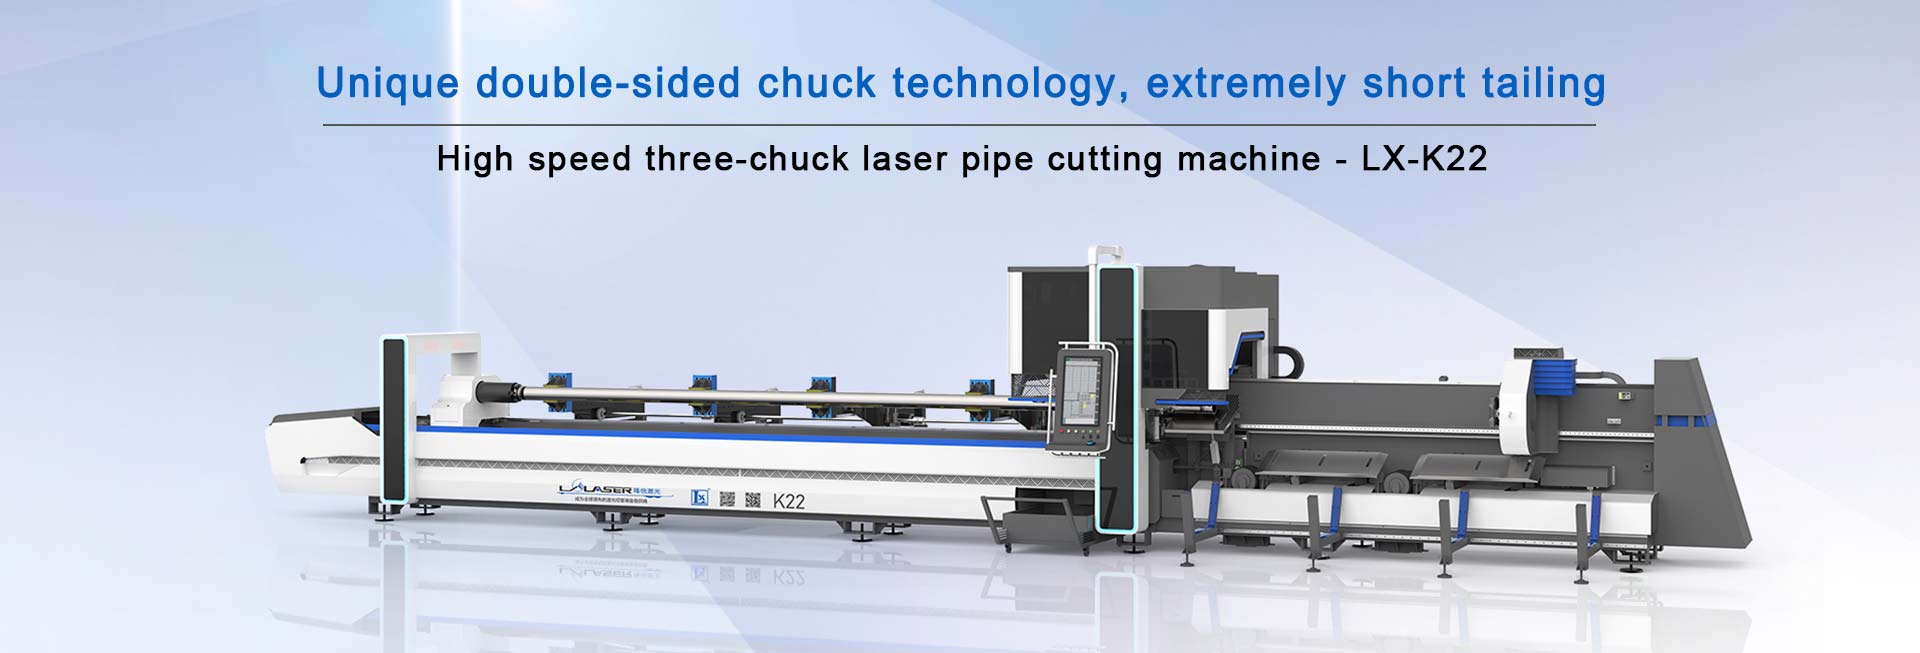 High speed three-chuck zero tailing laser pipe cutting machine K22